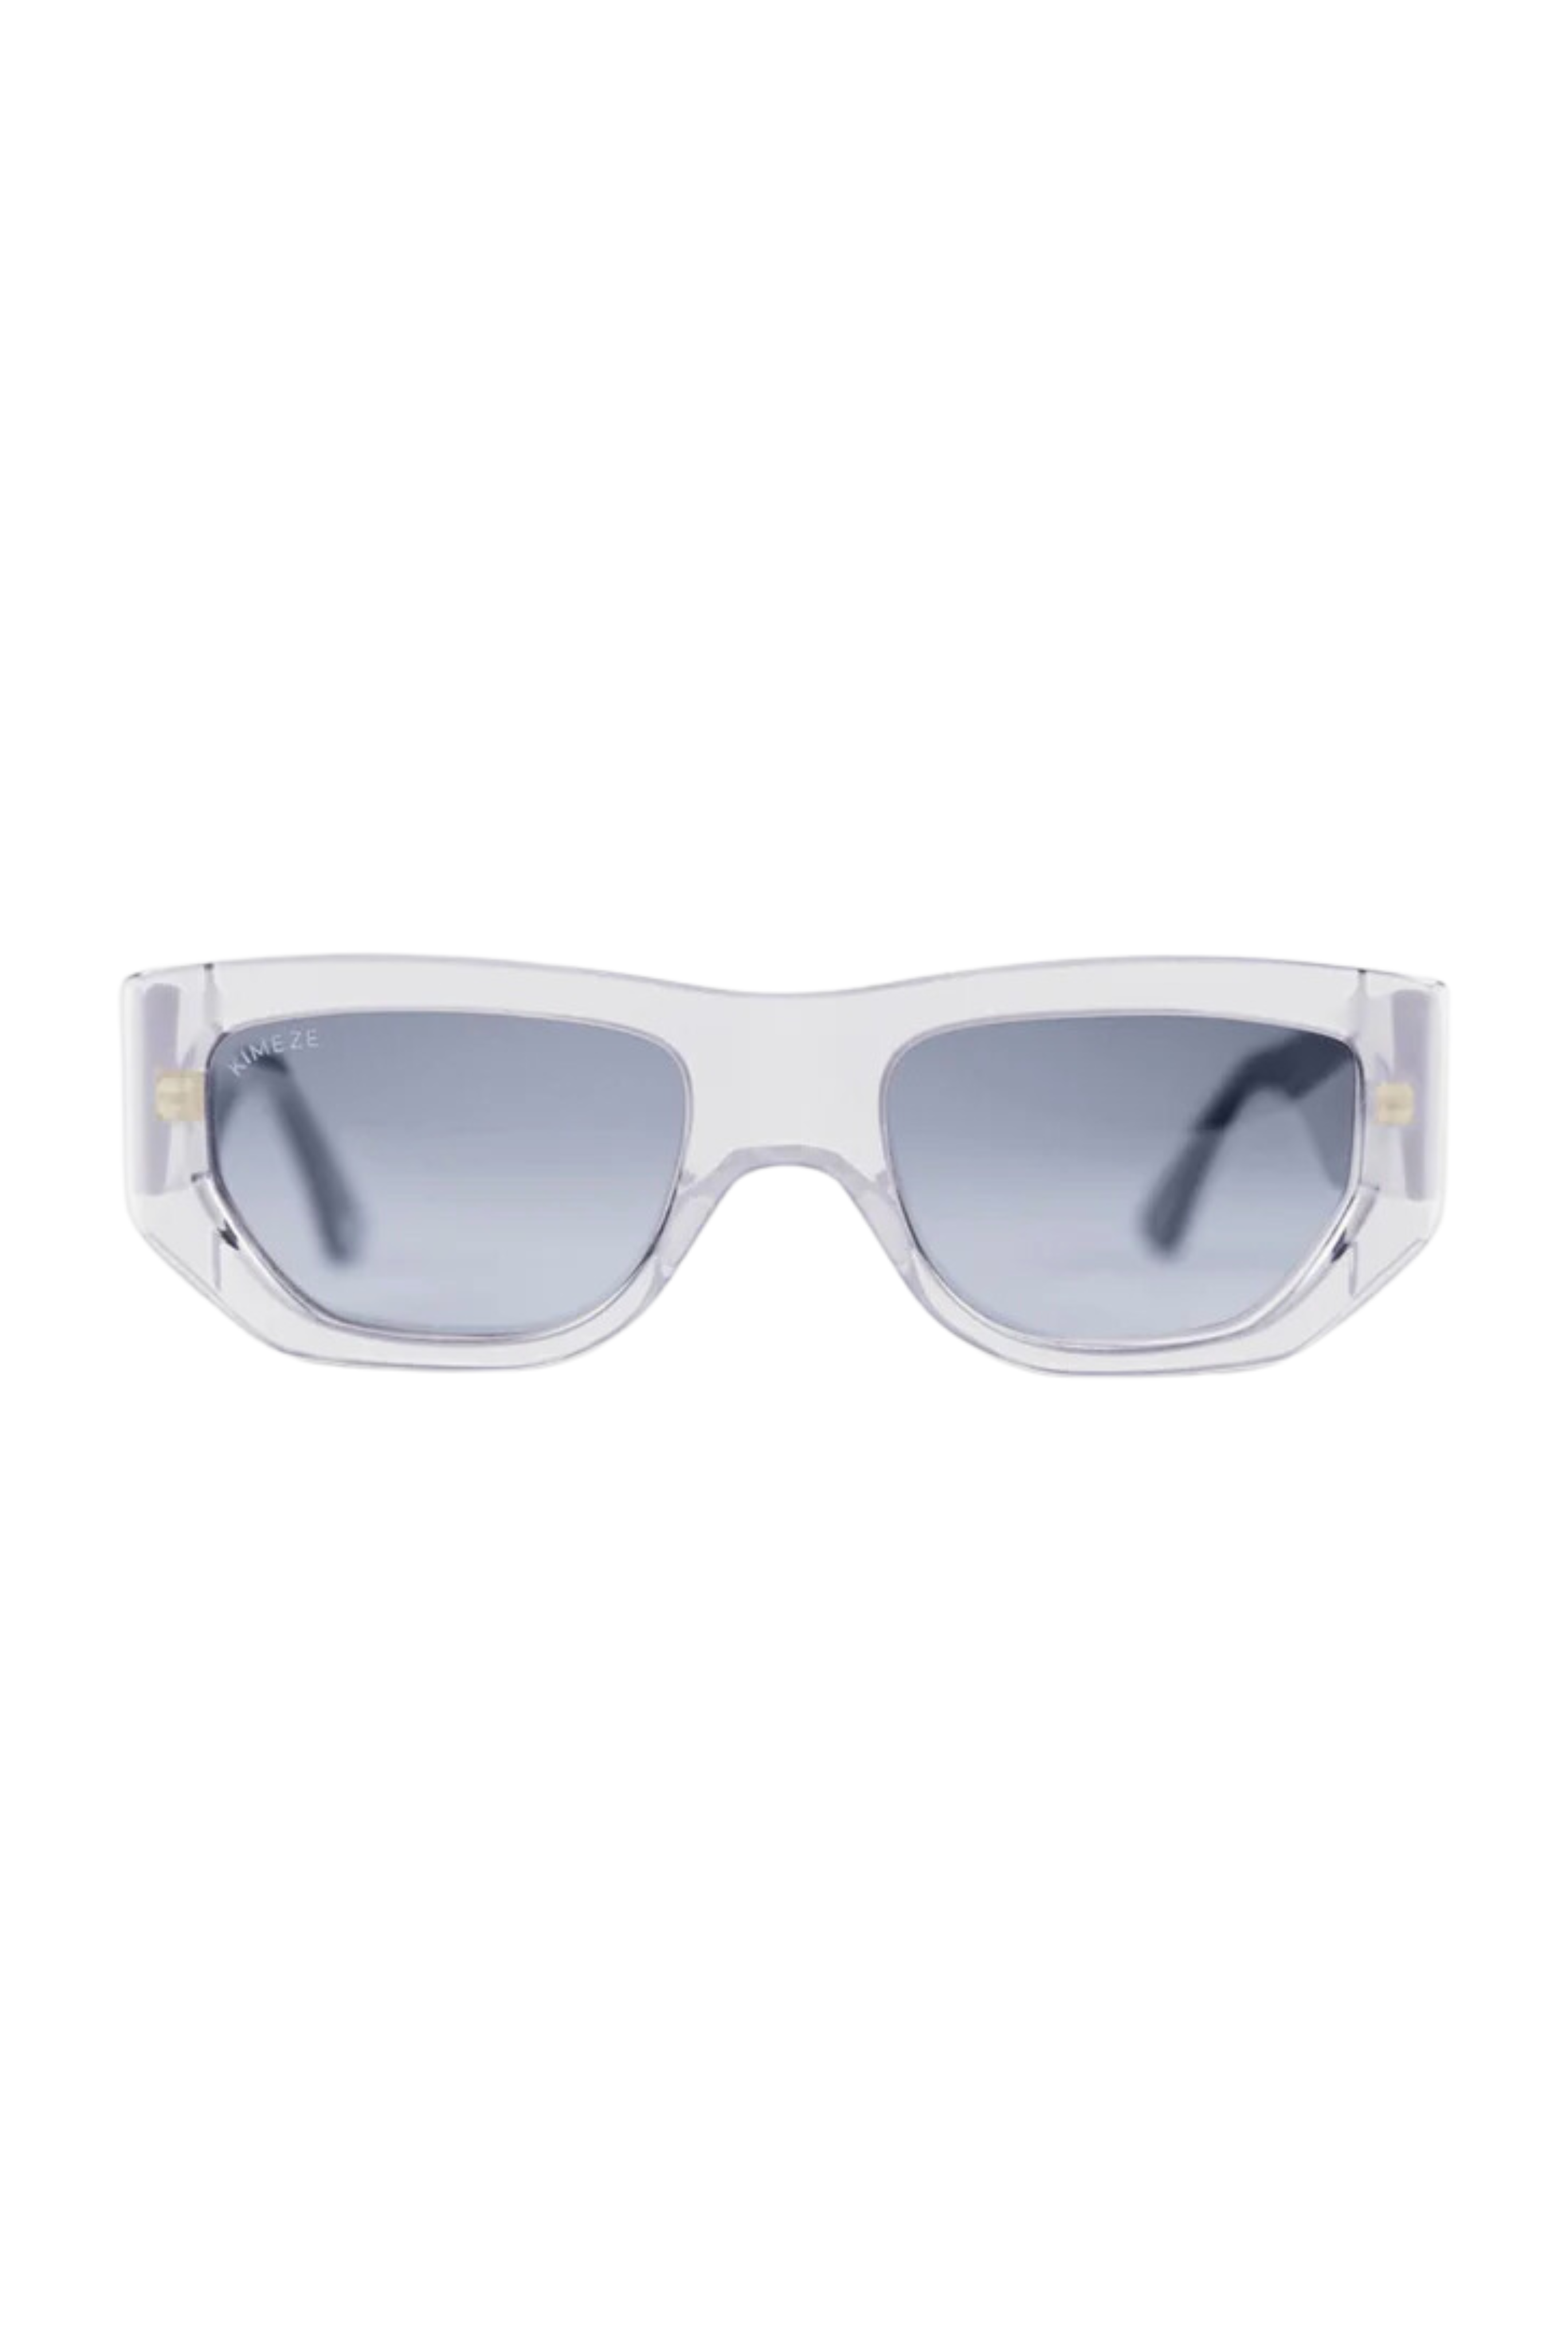 Concept 1 Sunglasses